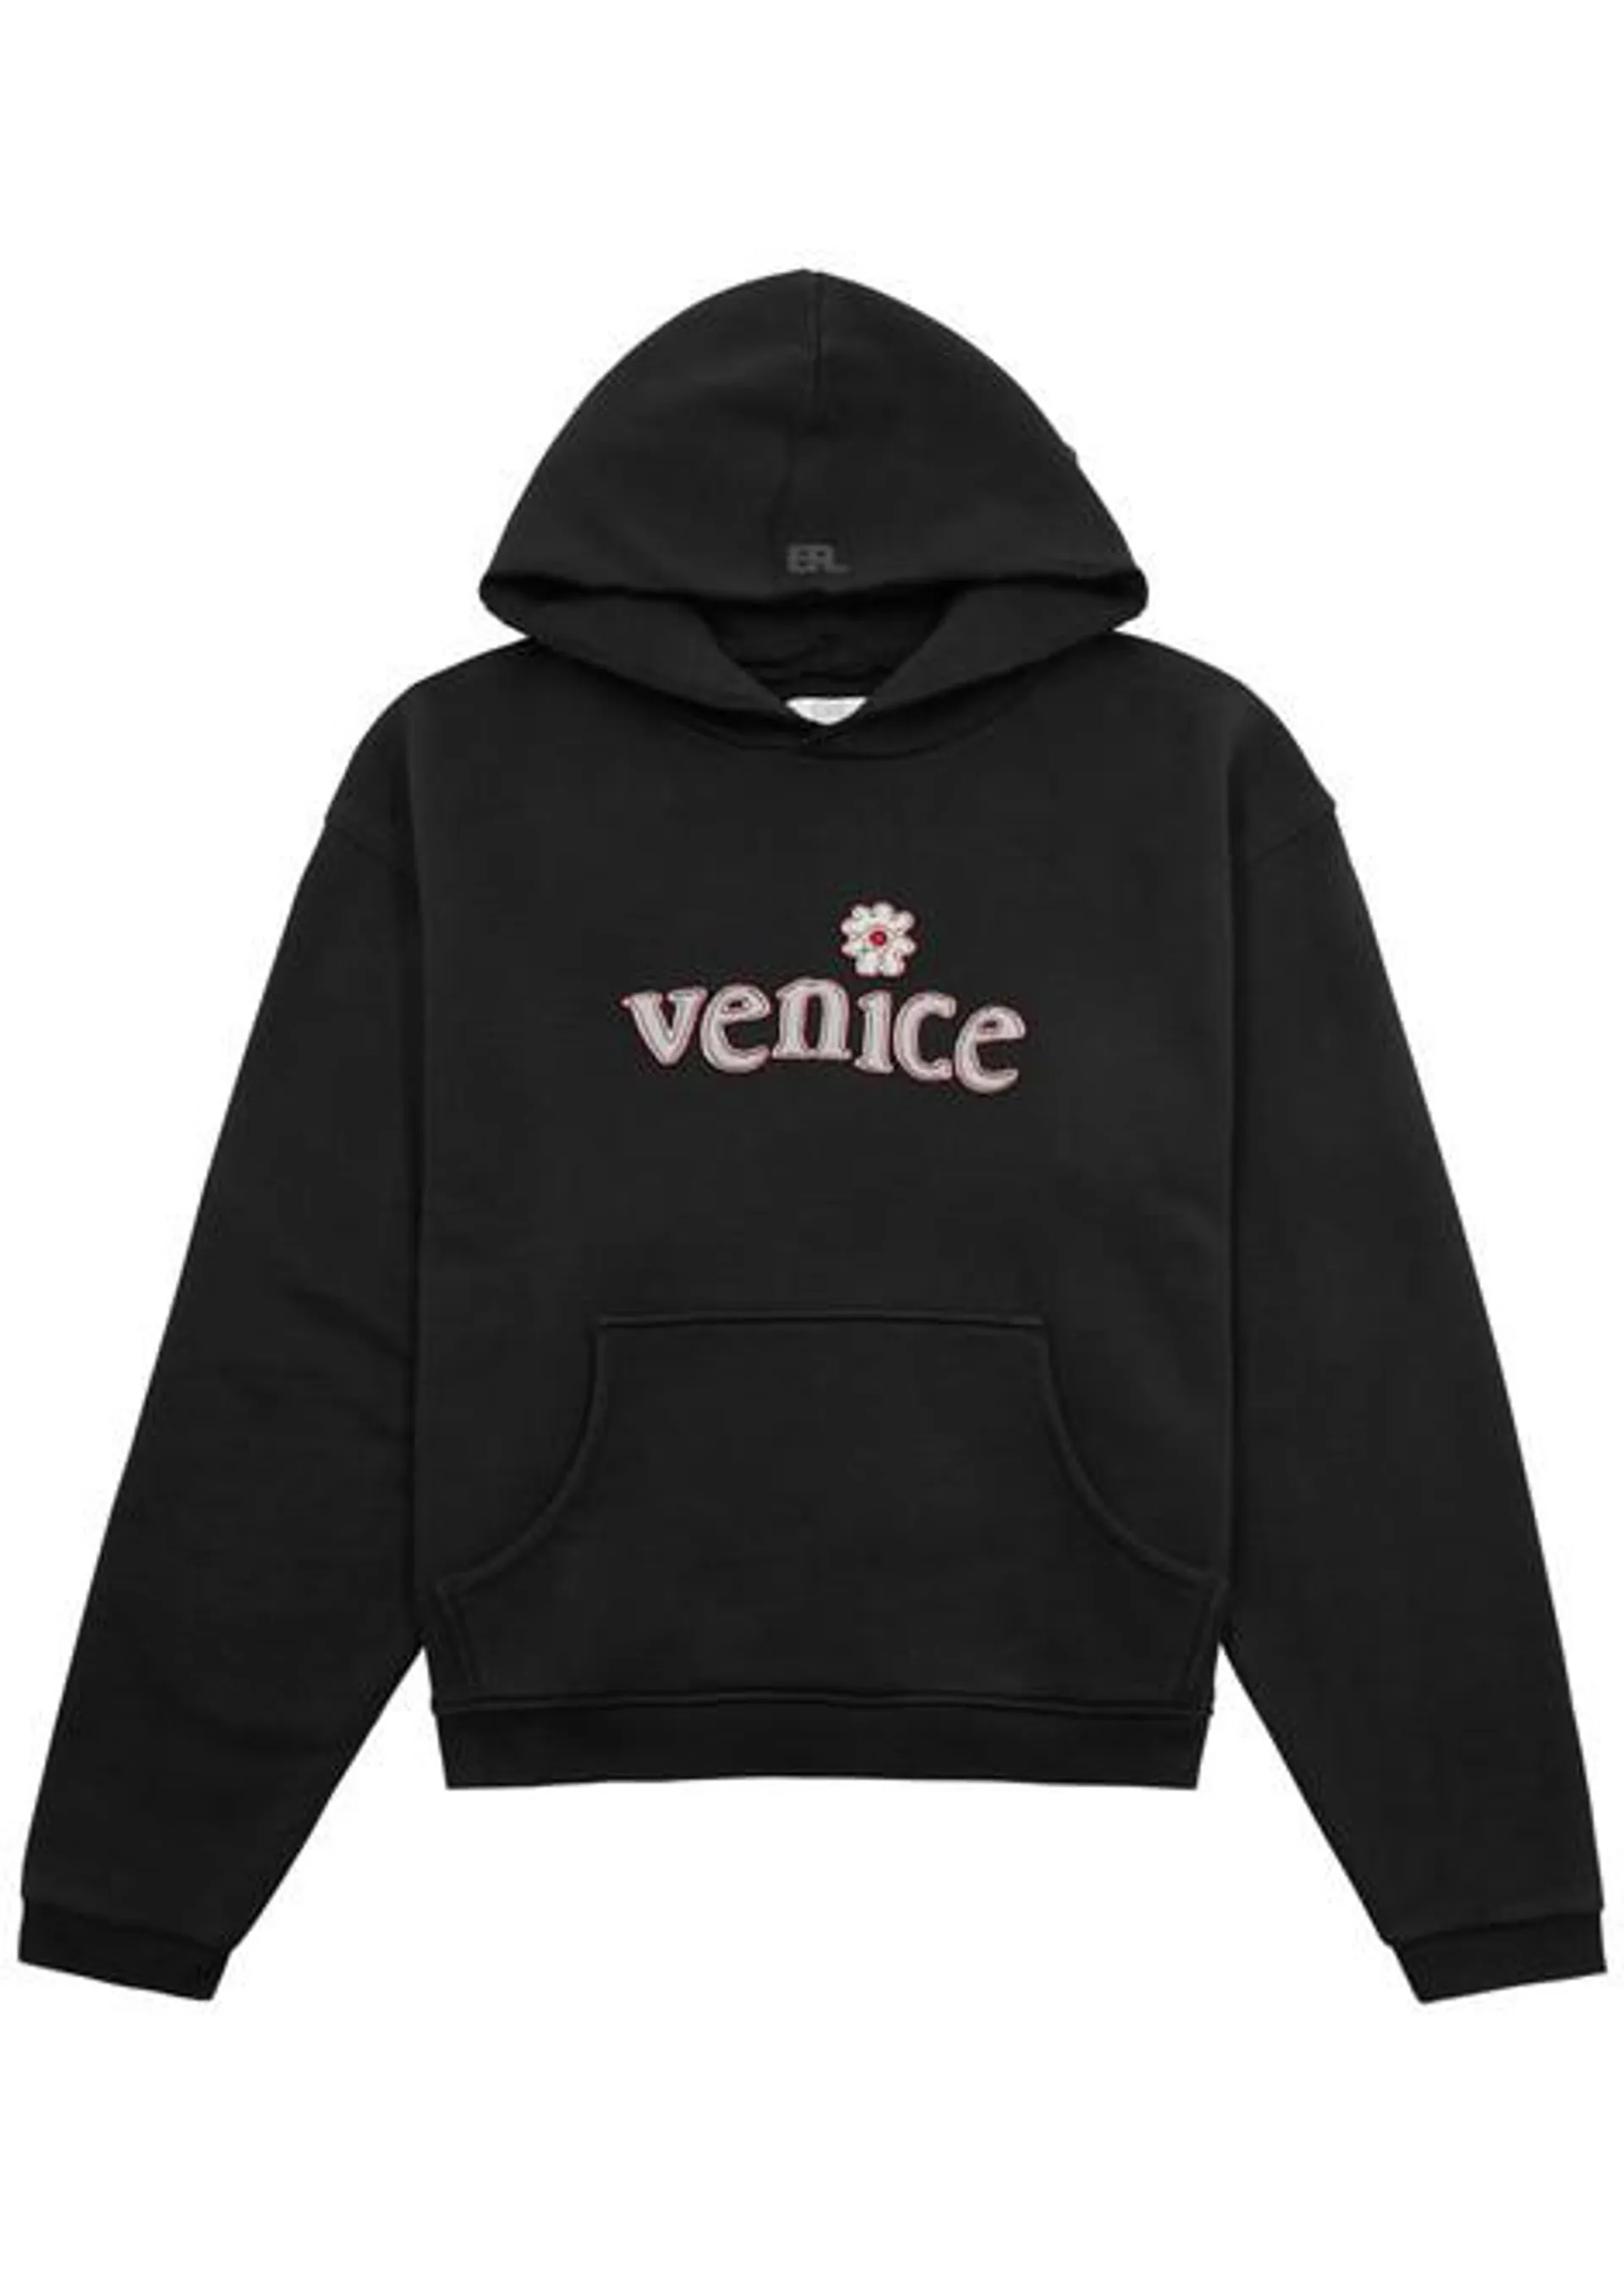 Venice hooded cotton sweatshirt